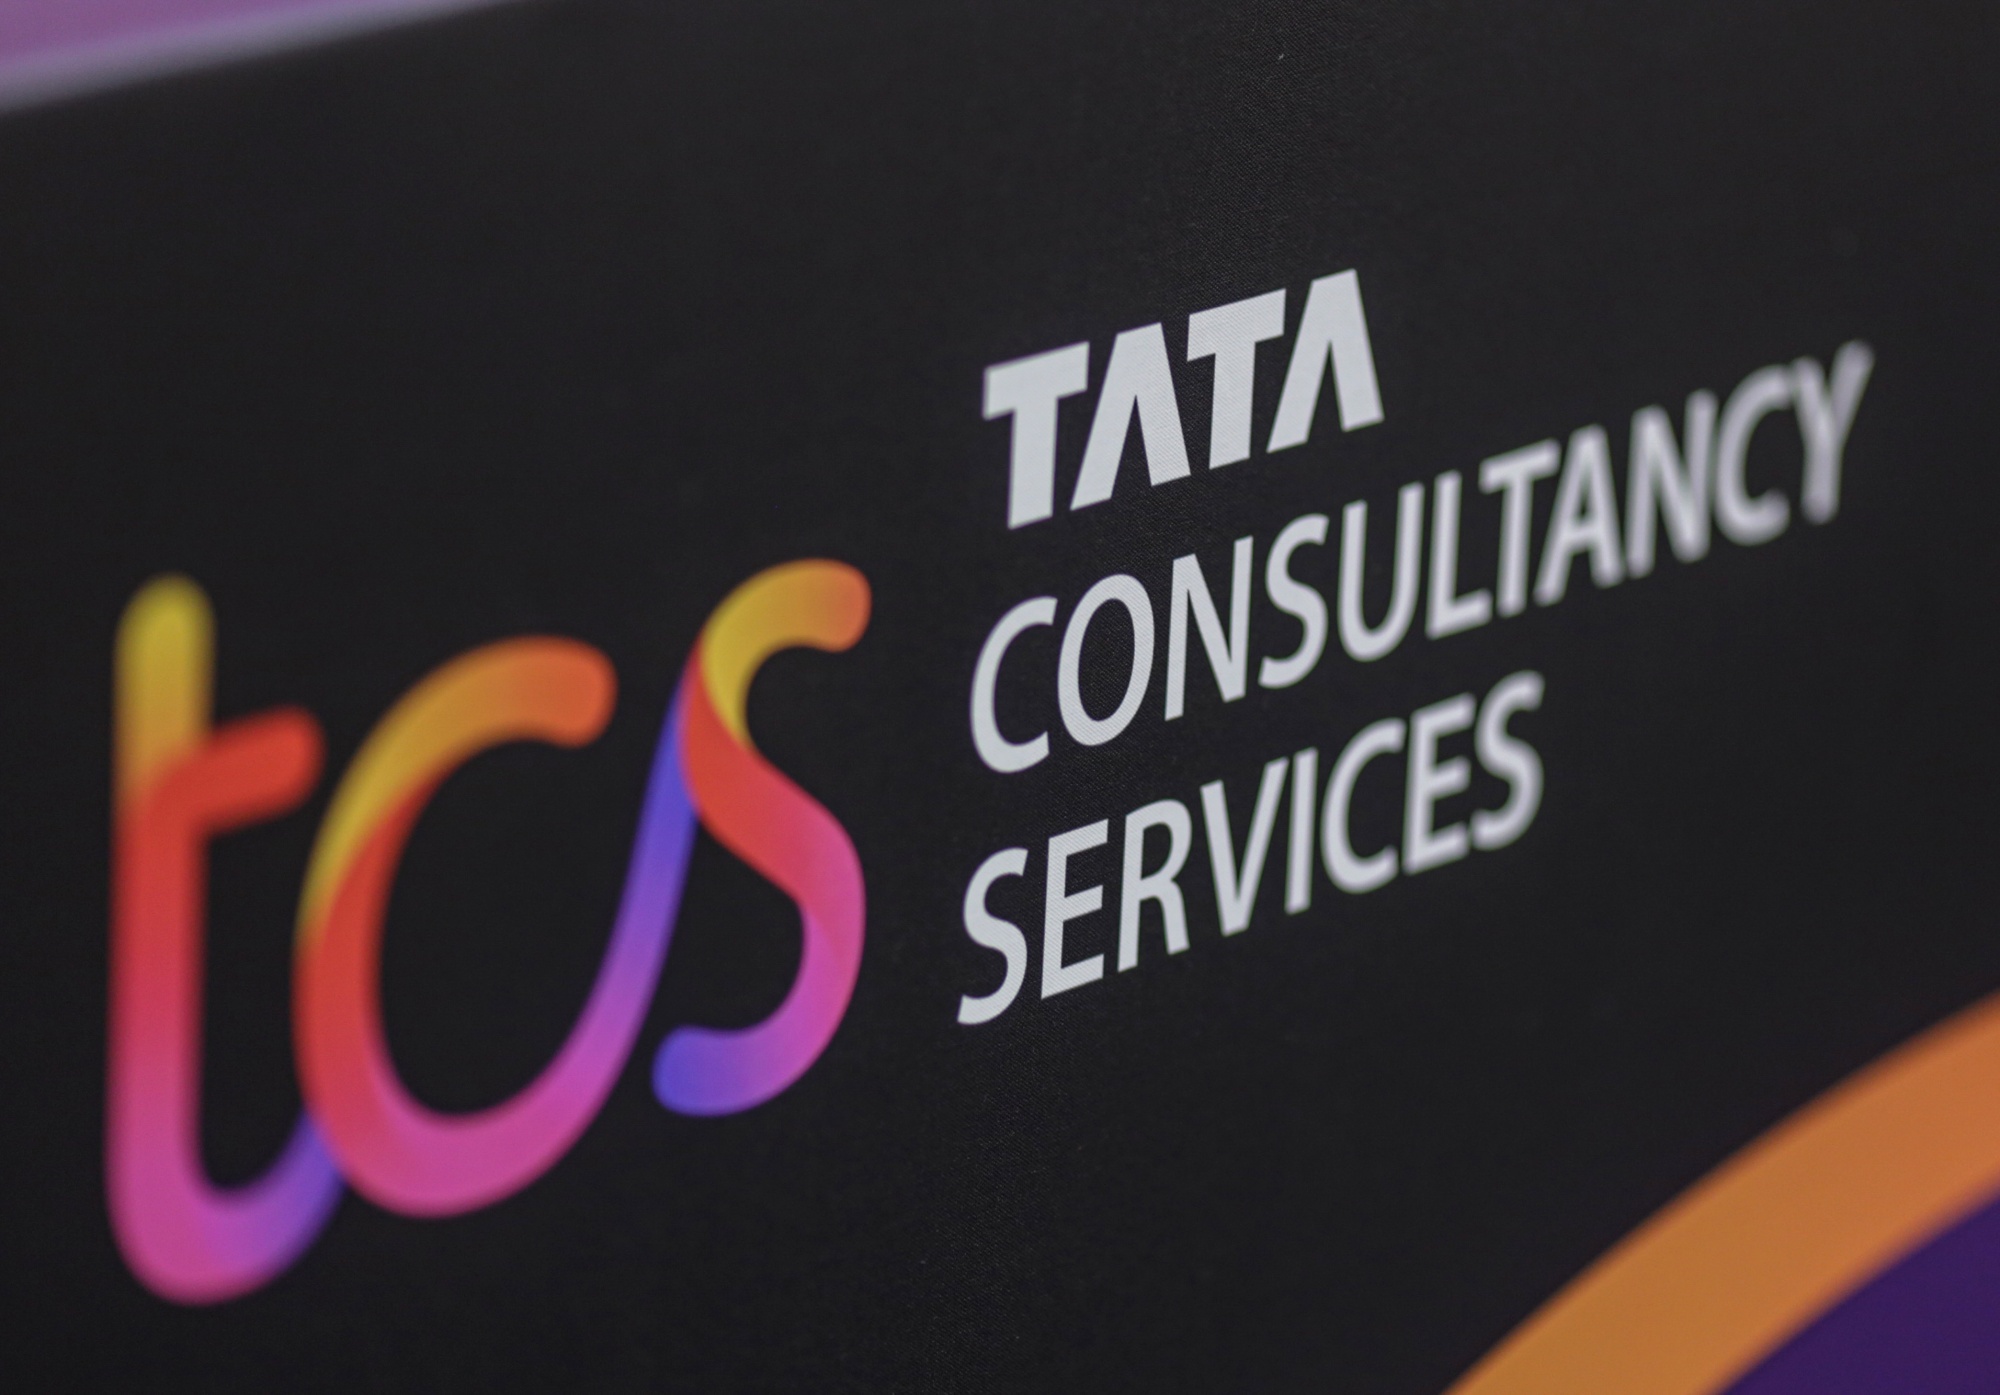 tcs-results-tata-consultancy-services-profit-beats-estimates-bloomberg